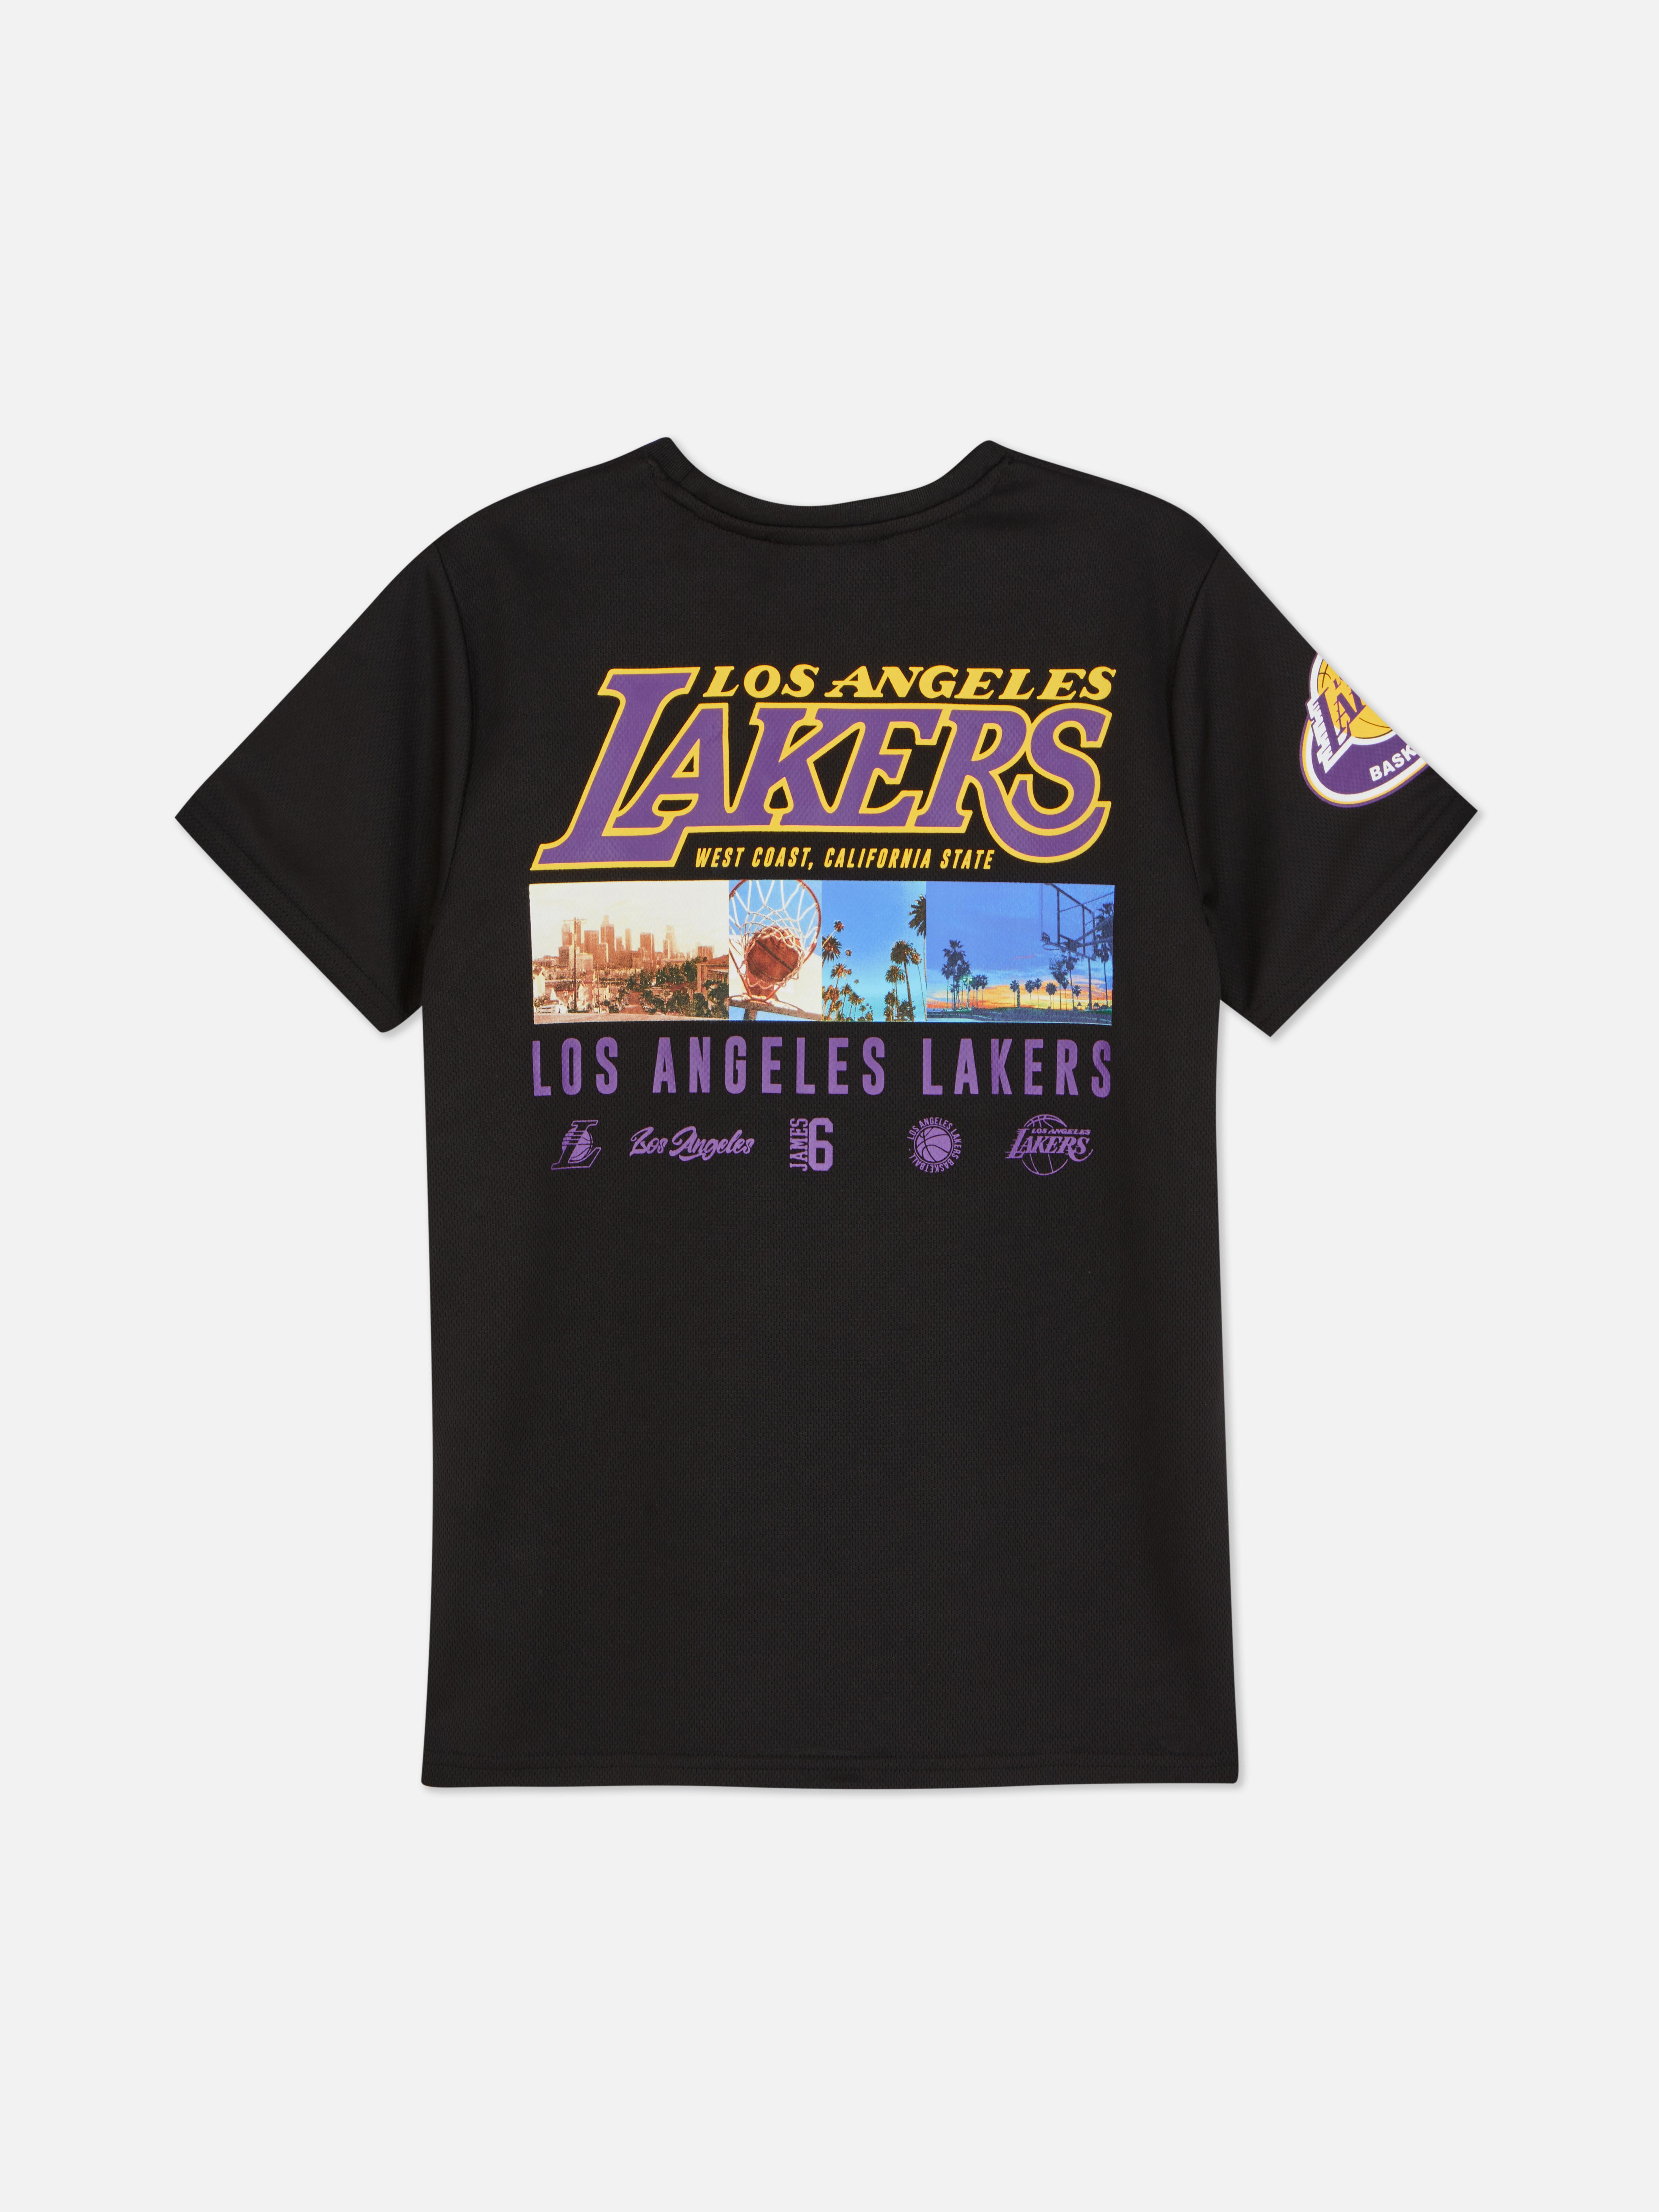 Primark NBA Los Angeles Lakers Basketball T-Shirt Size XL